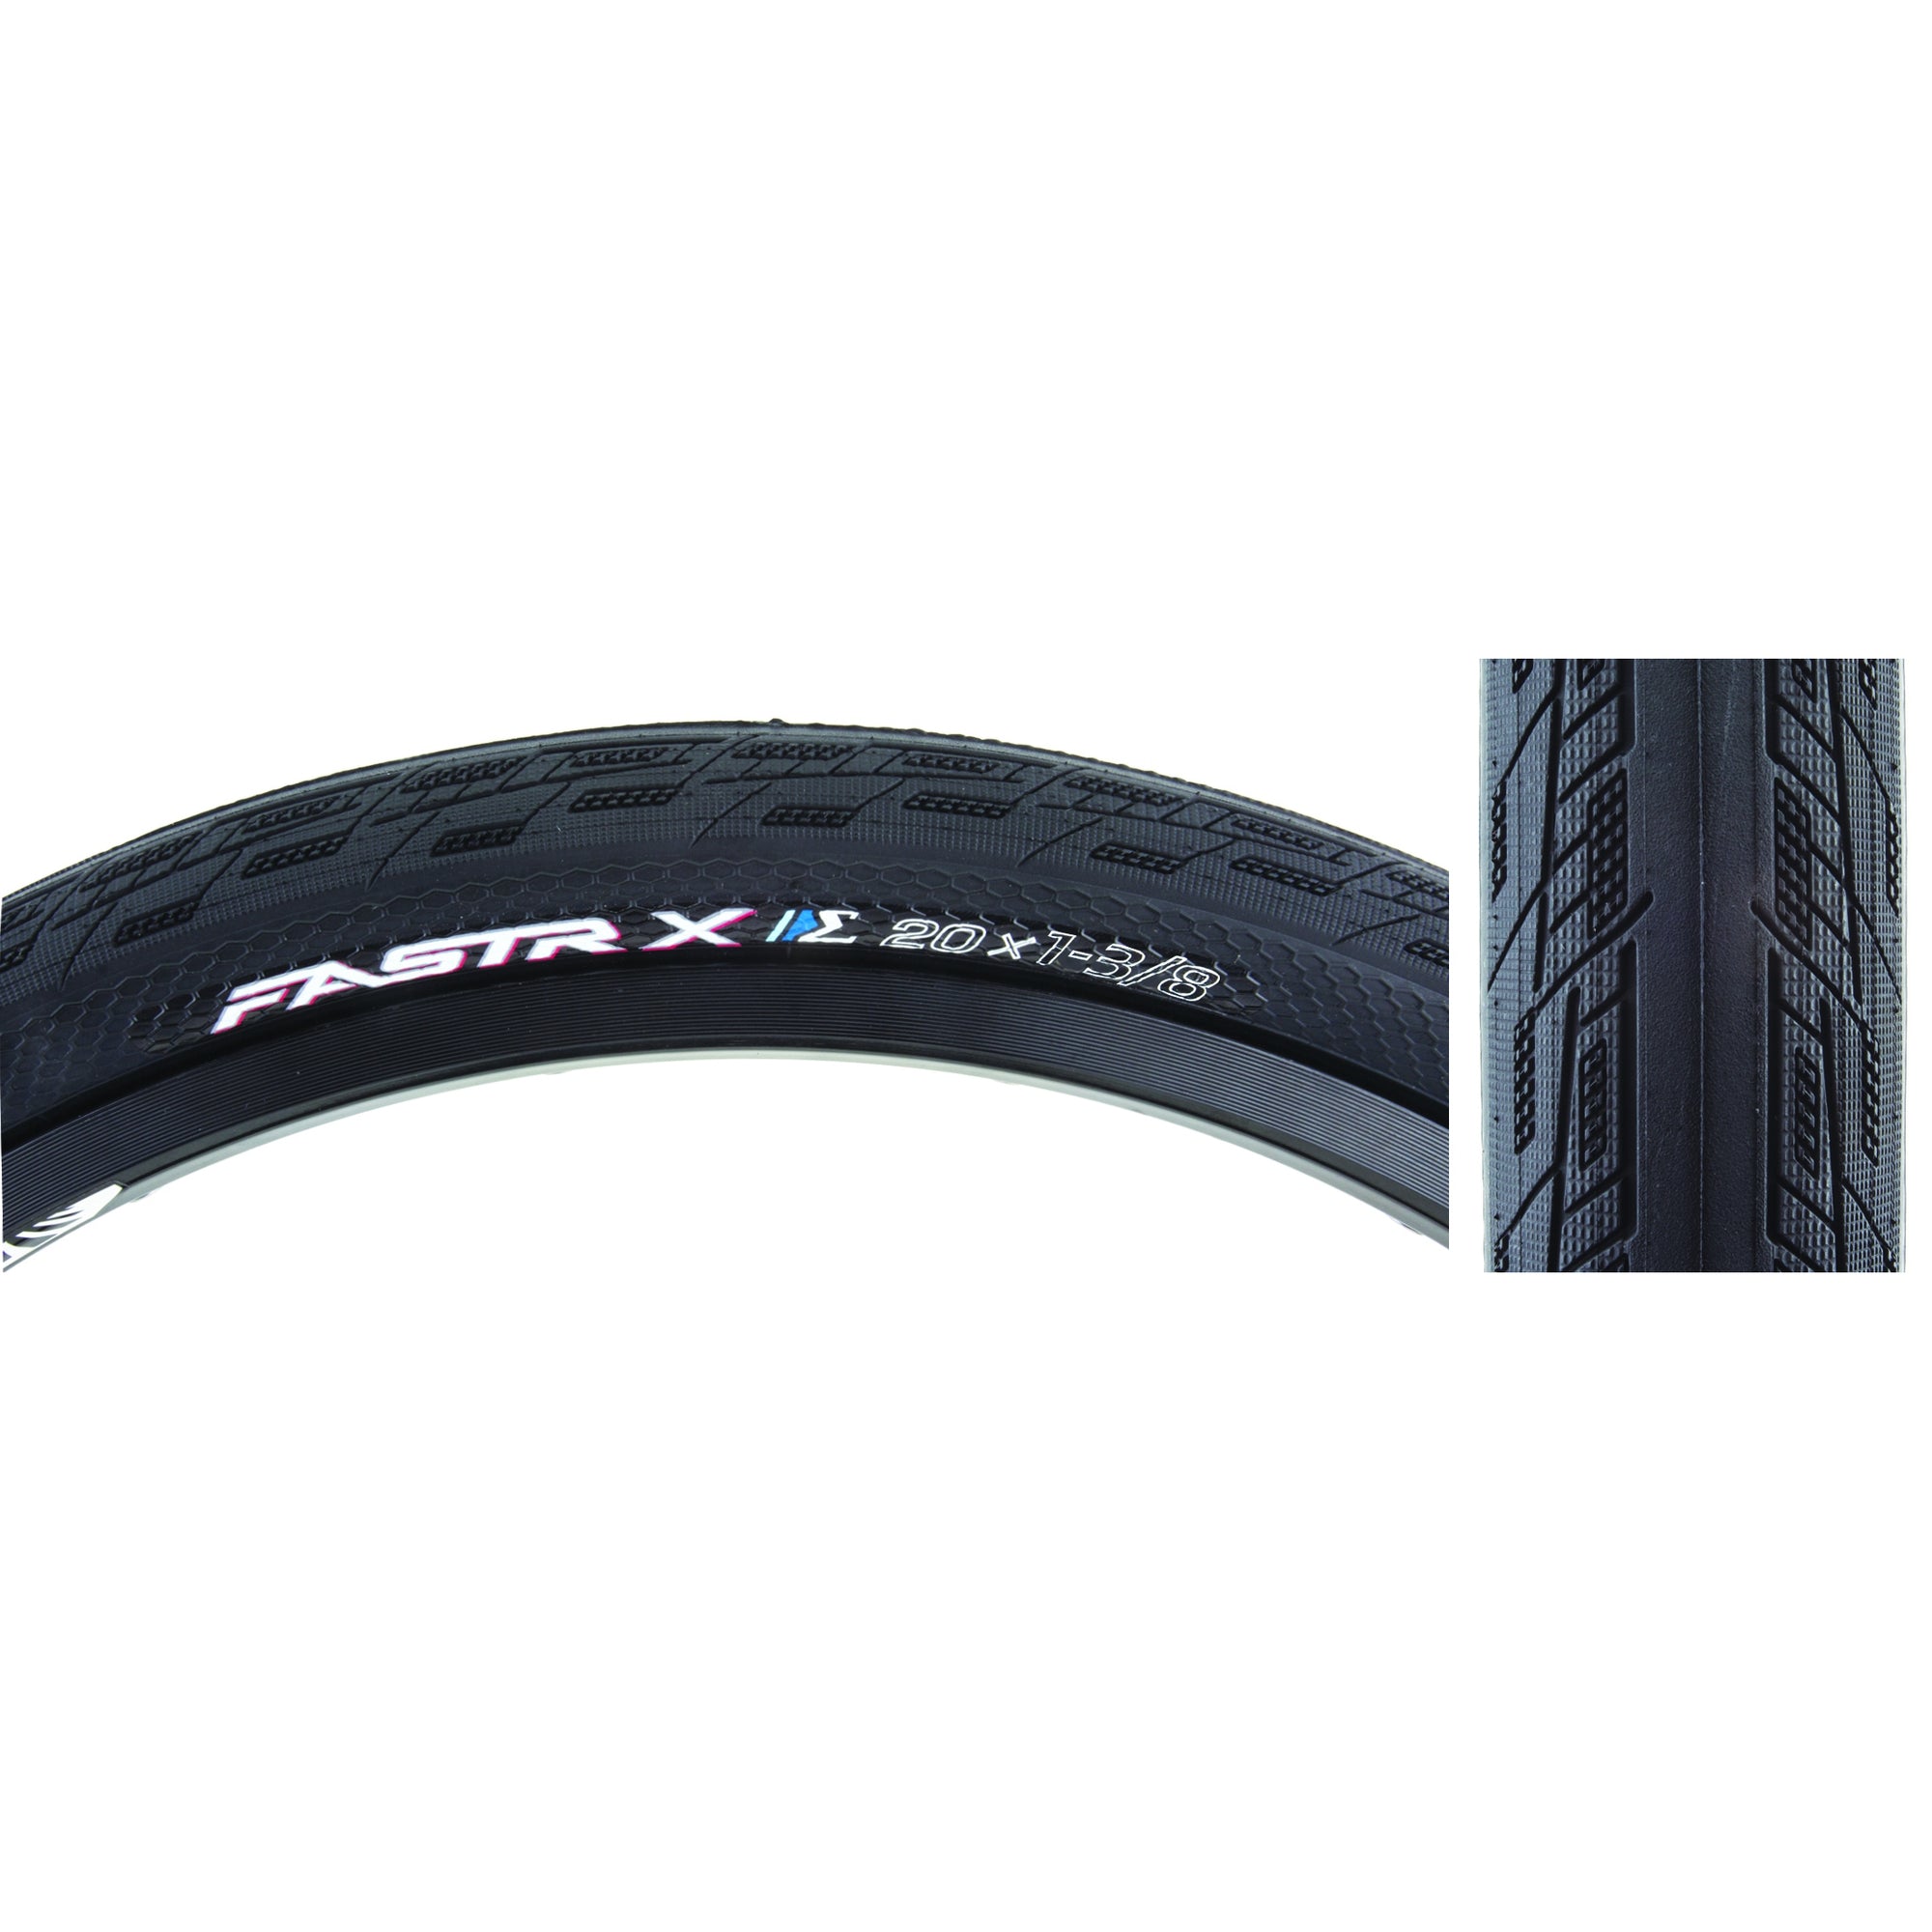 20x1-3/8 Tioga Fastr-X S-Spec Folding BMX tire - Black